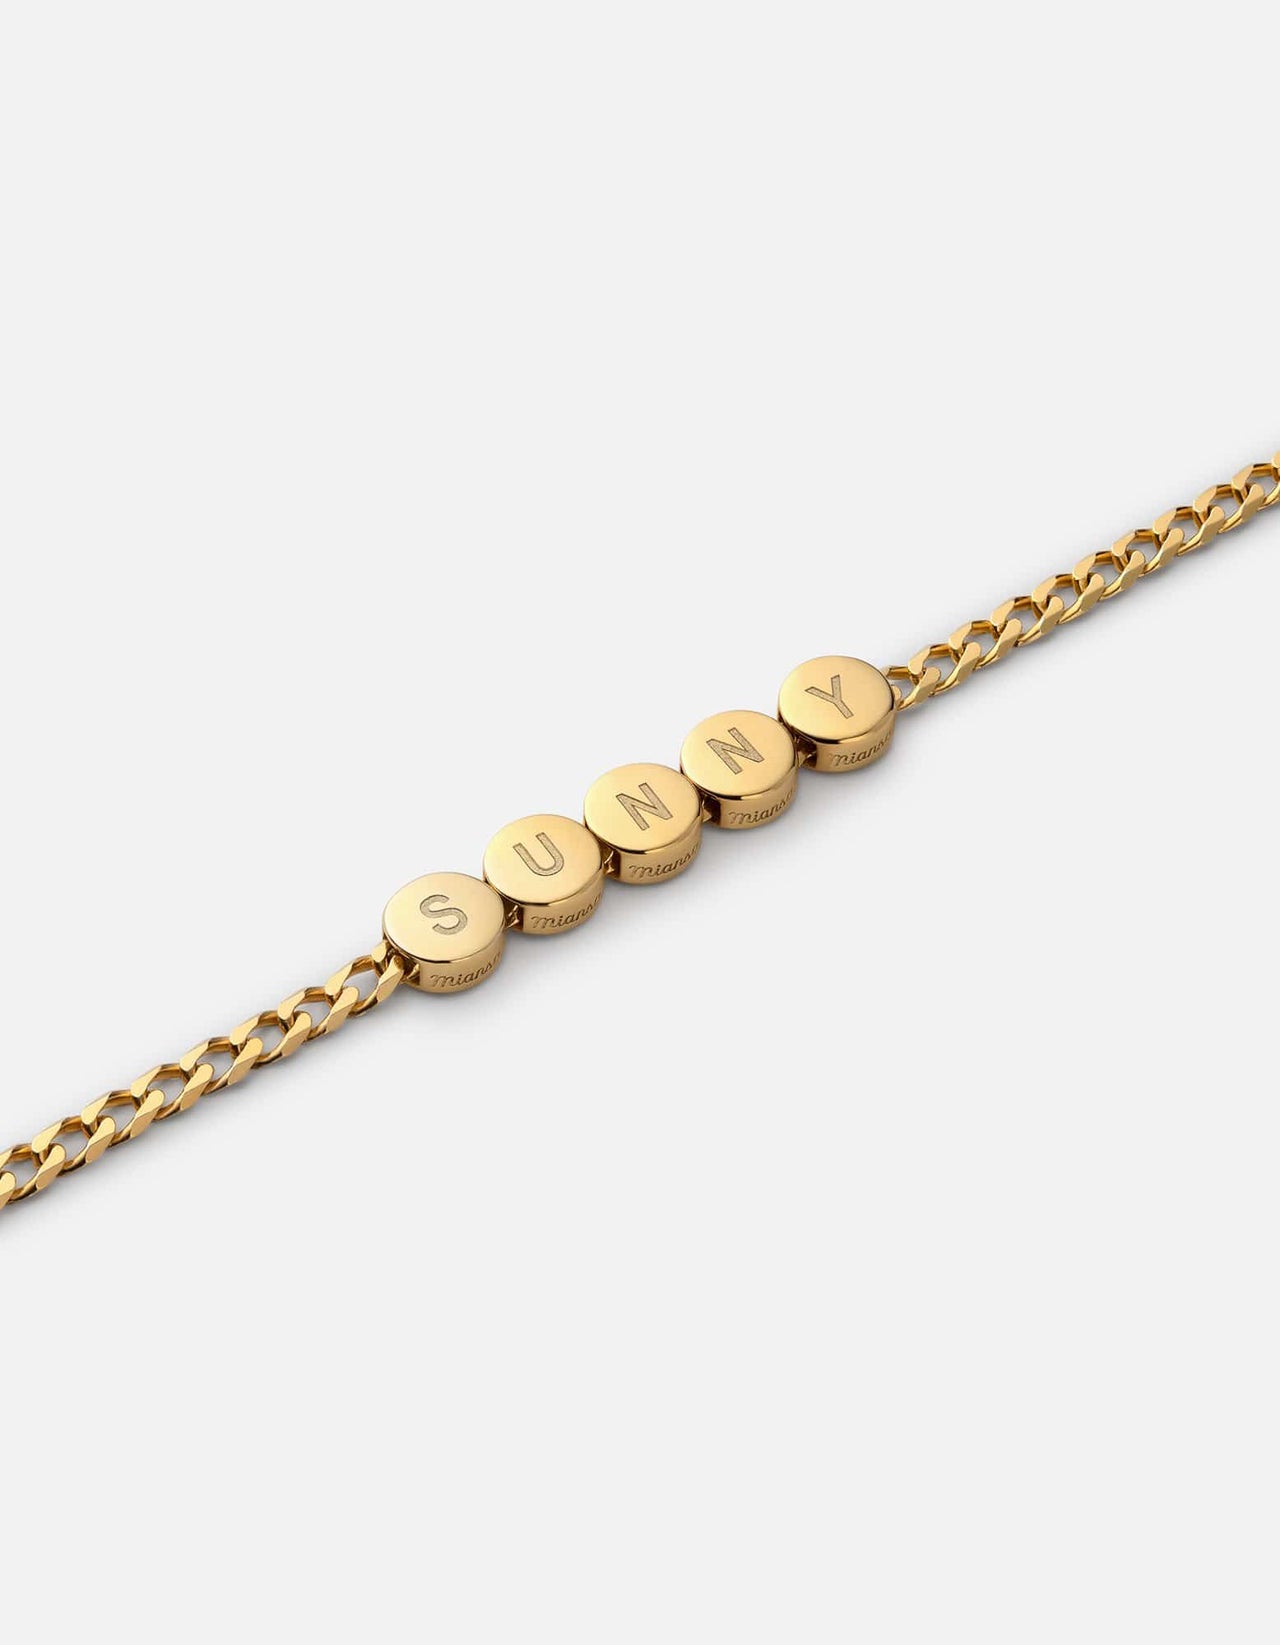 Miansai Women's 4mm Cuban Chain Bracelet, Gold Vermeil, Size M